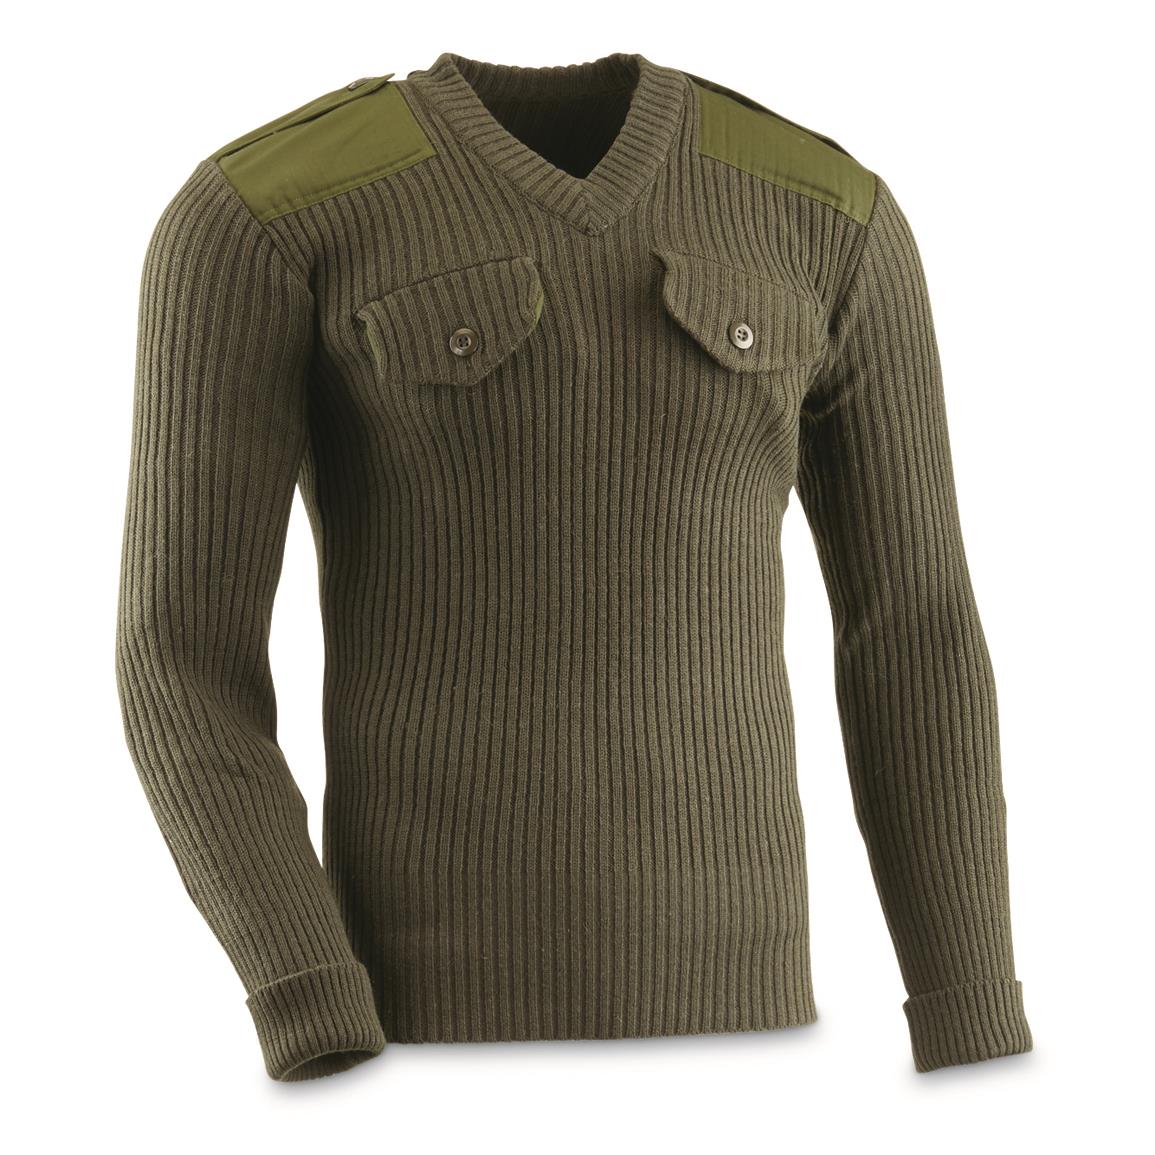 Jordanian Military Surplus Wool Commando Sweater, New, Olive Drab